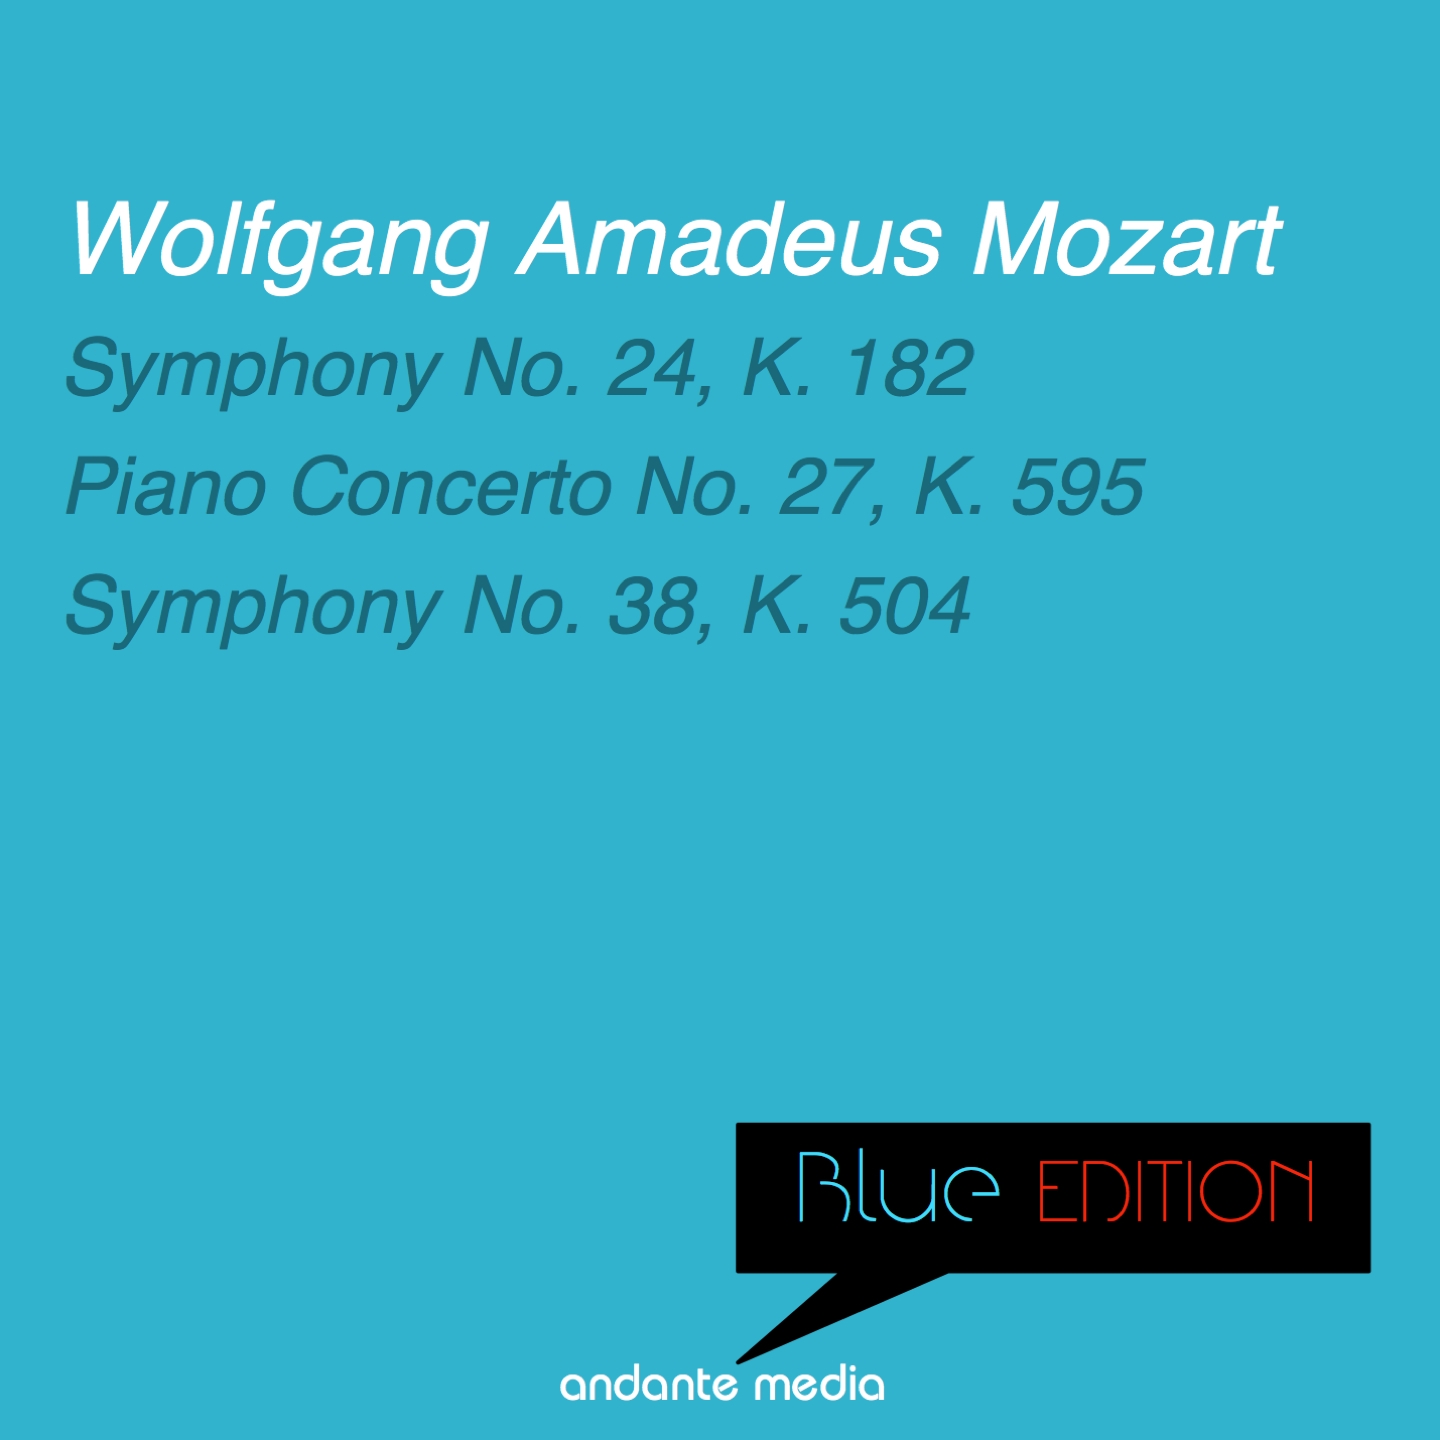 Symphony No. 38 in D Major, K. 504 "Prague Symphony": I. Adagio - Allegro